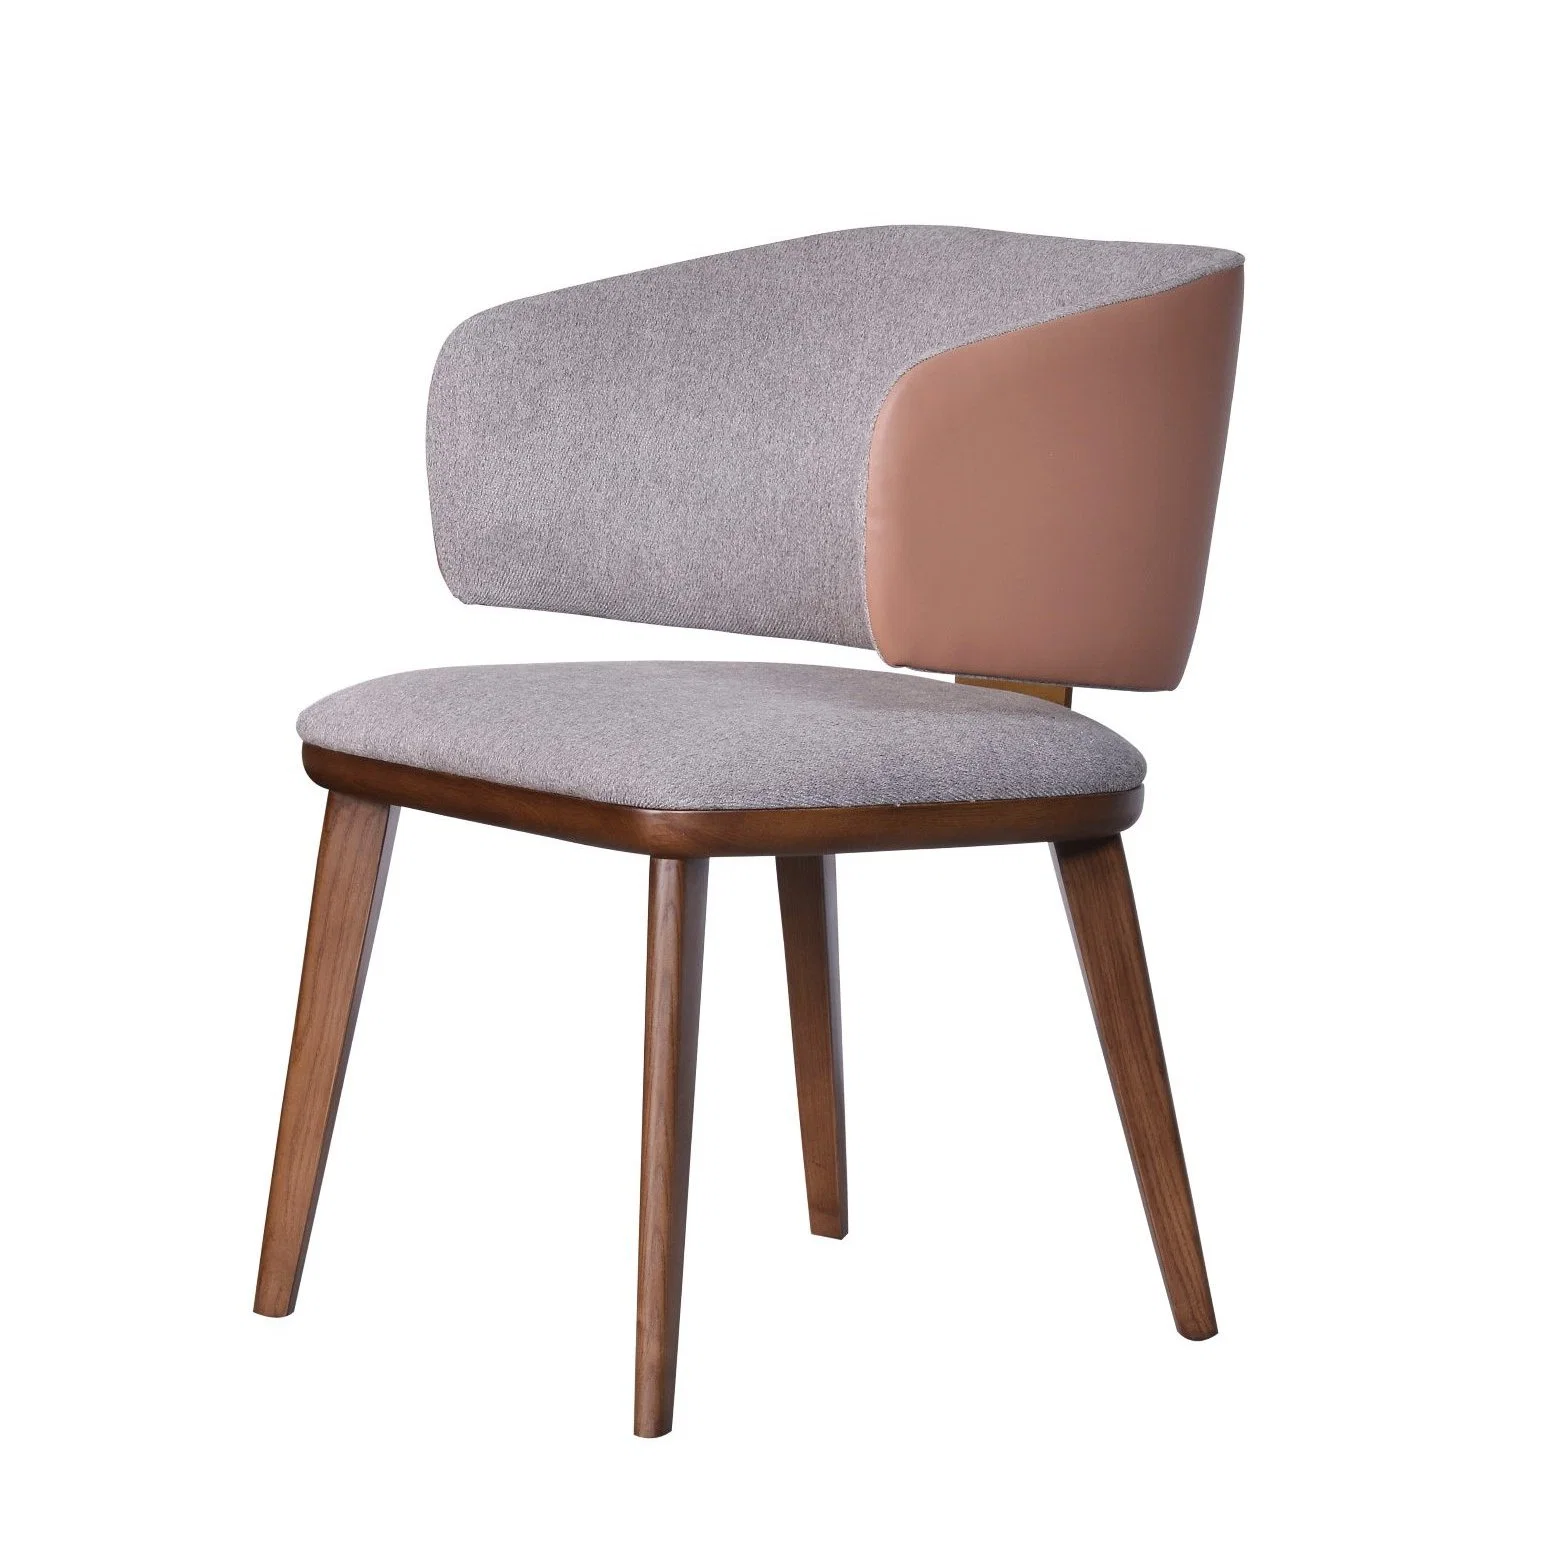 Modern Leisure Chair Hotel Furniture Fabric Garden Furniture Living Room Lounge Chair